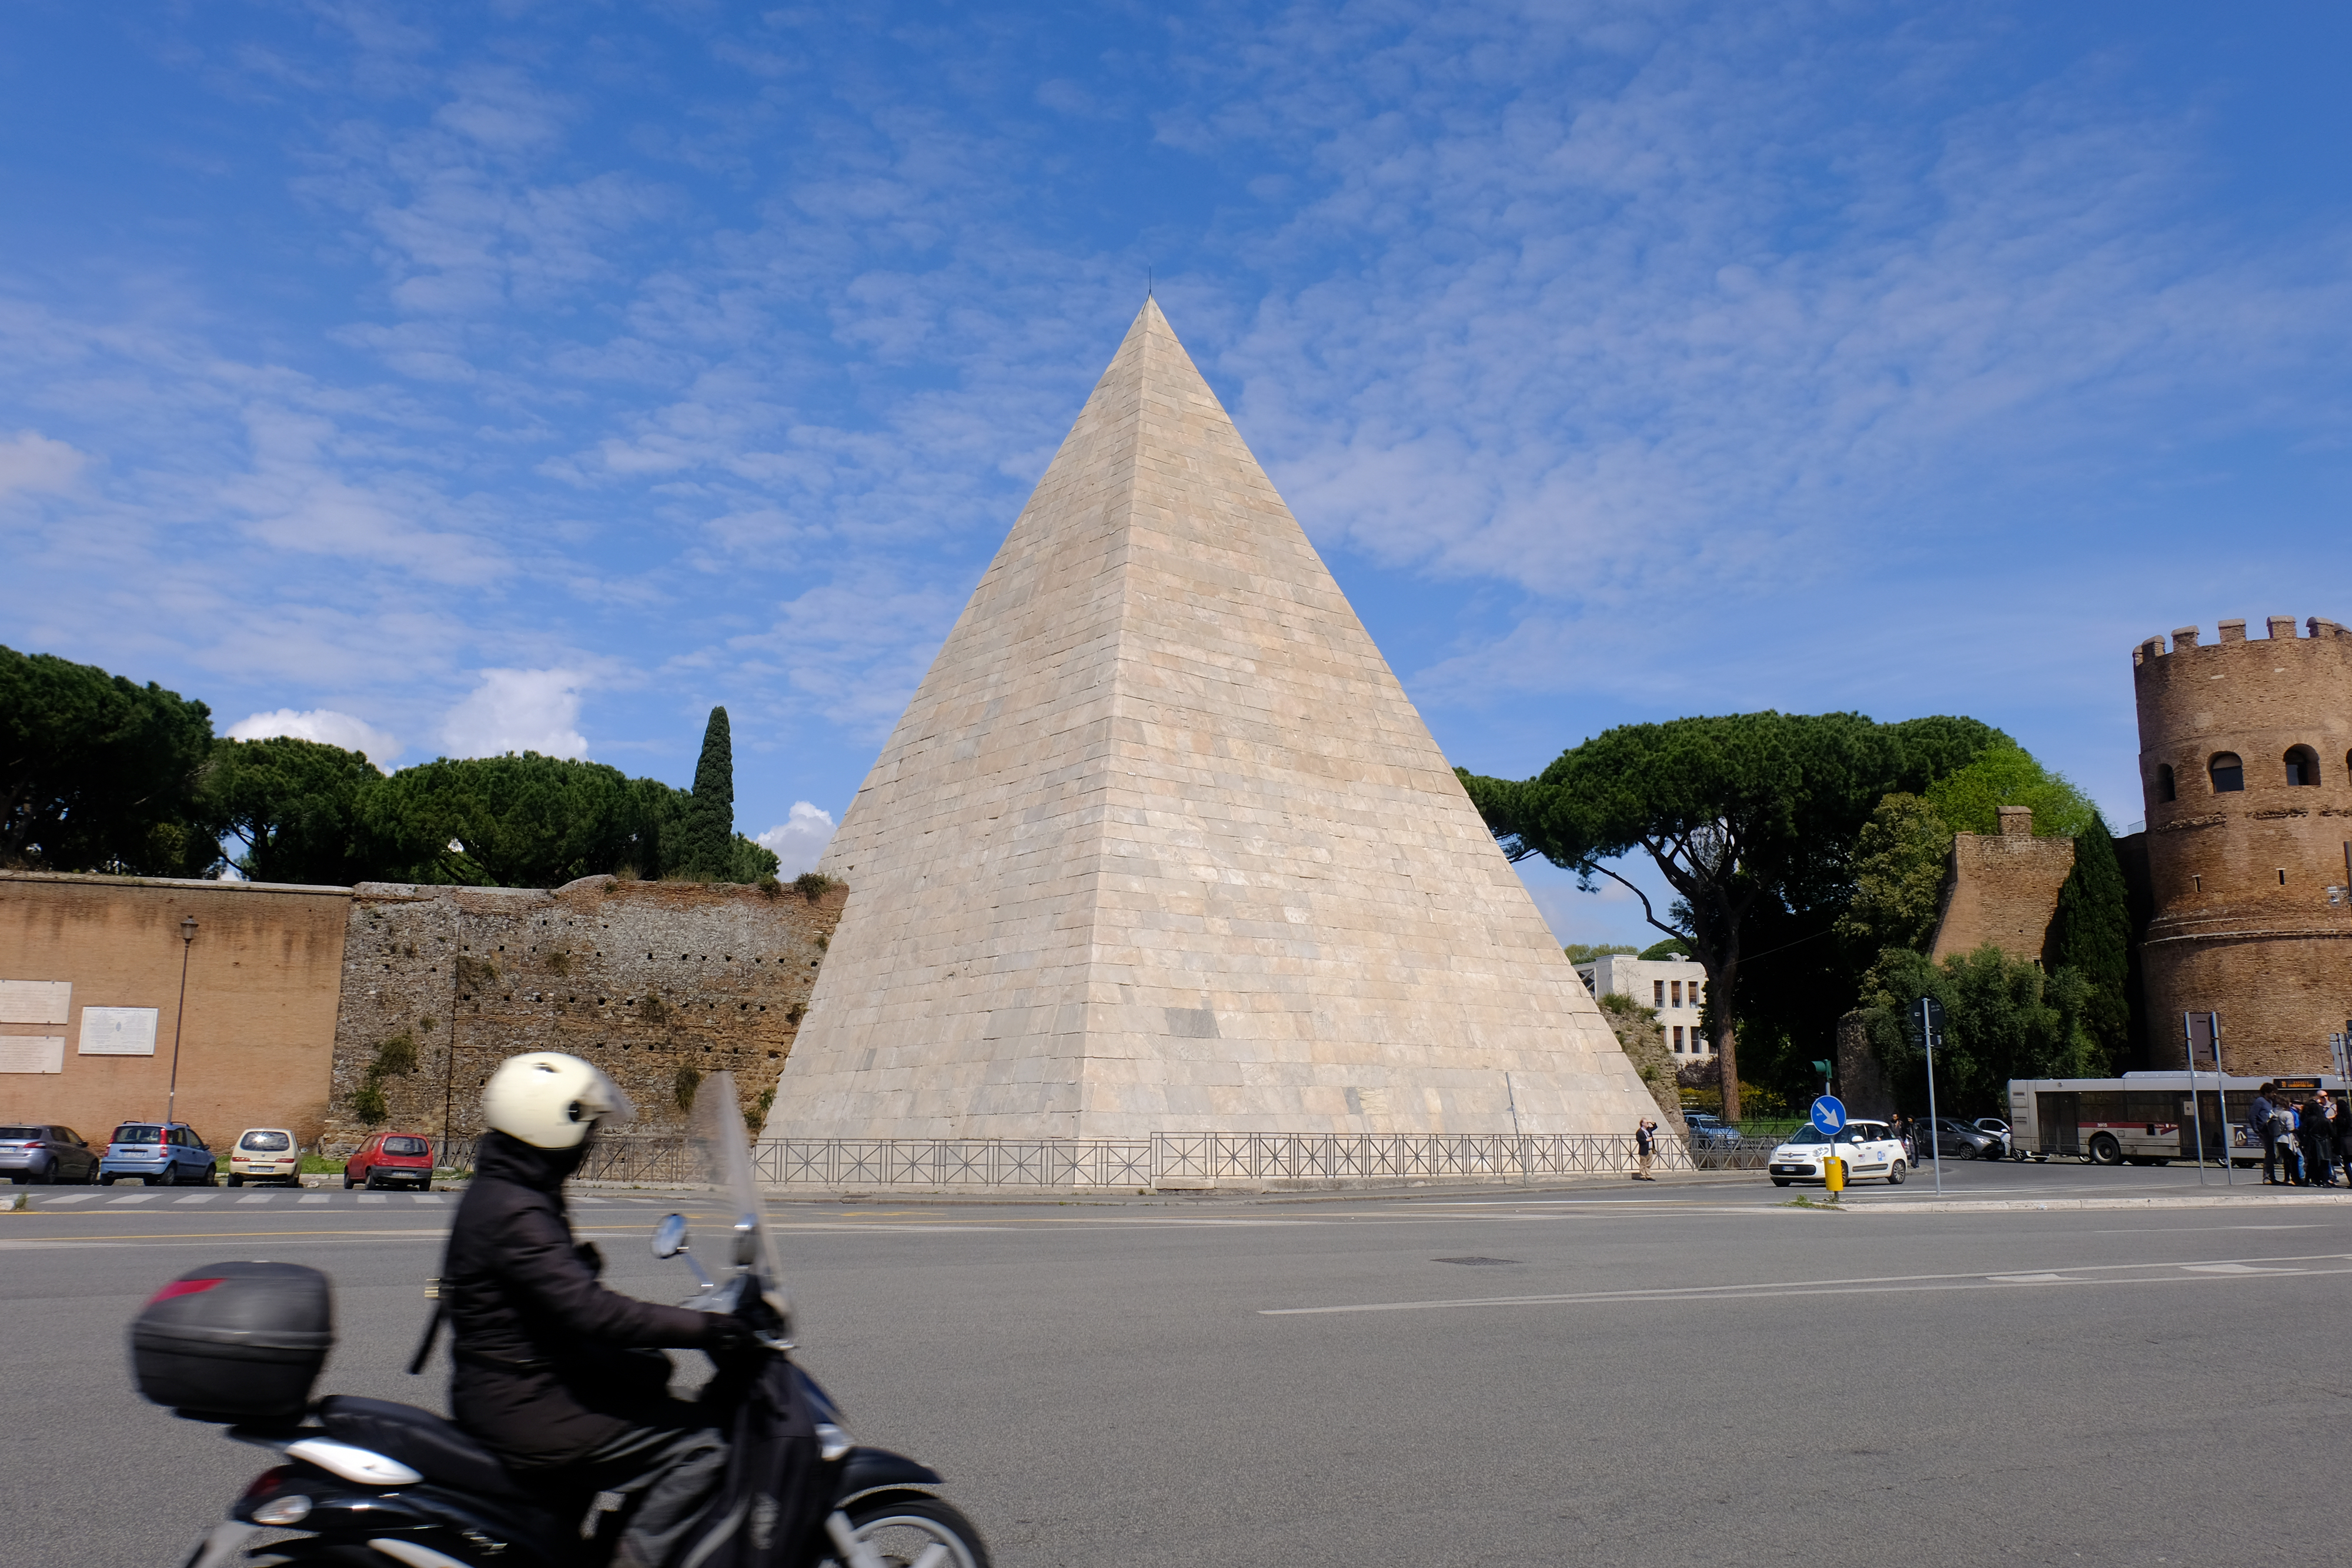 Pyramid in Rome